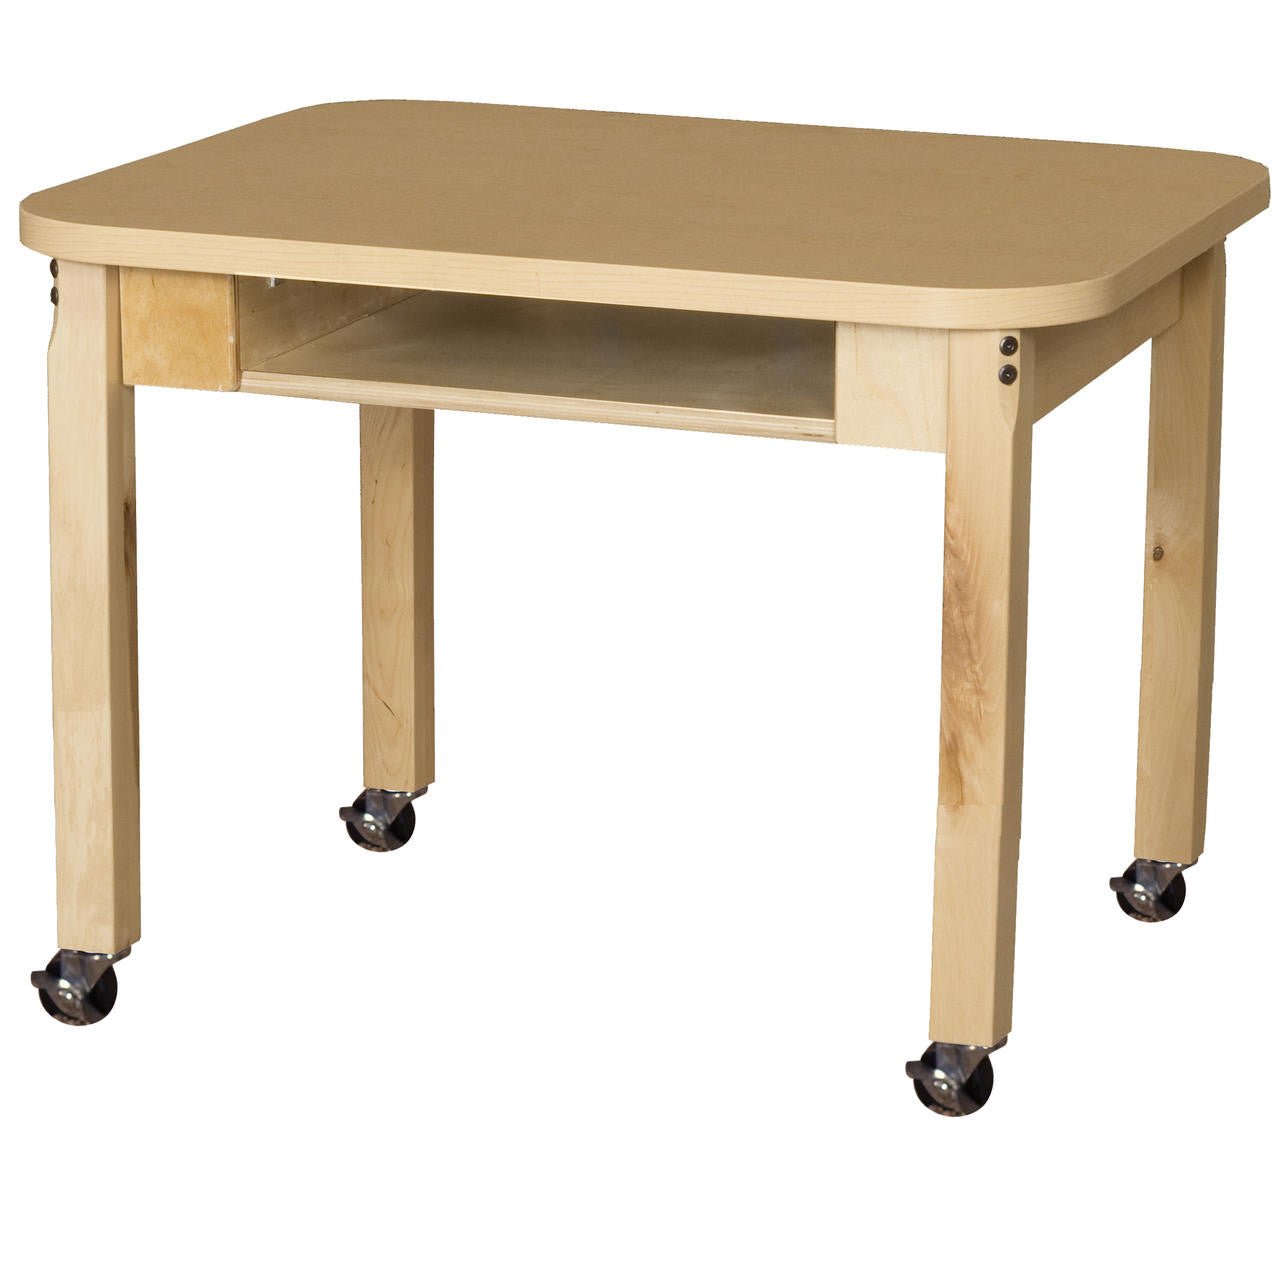 Mobile Classroom High Pressure Laminate Desk with Hardwood Legs- 29